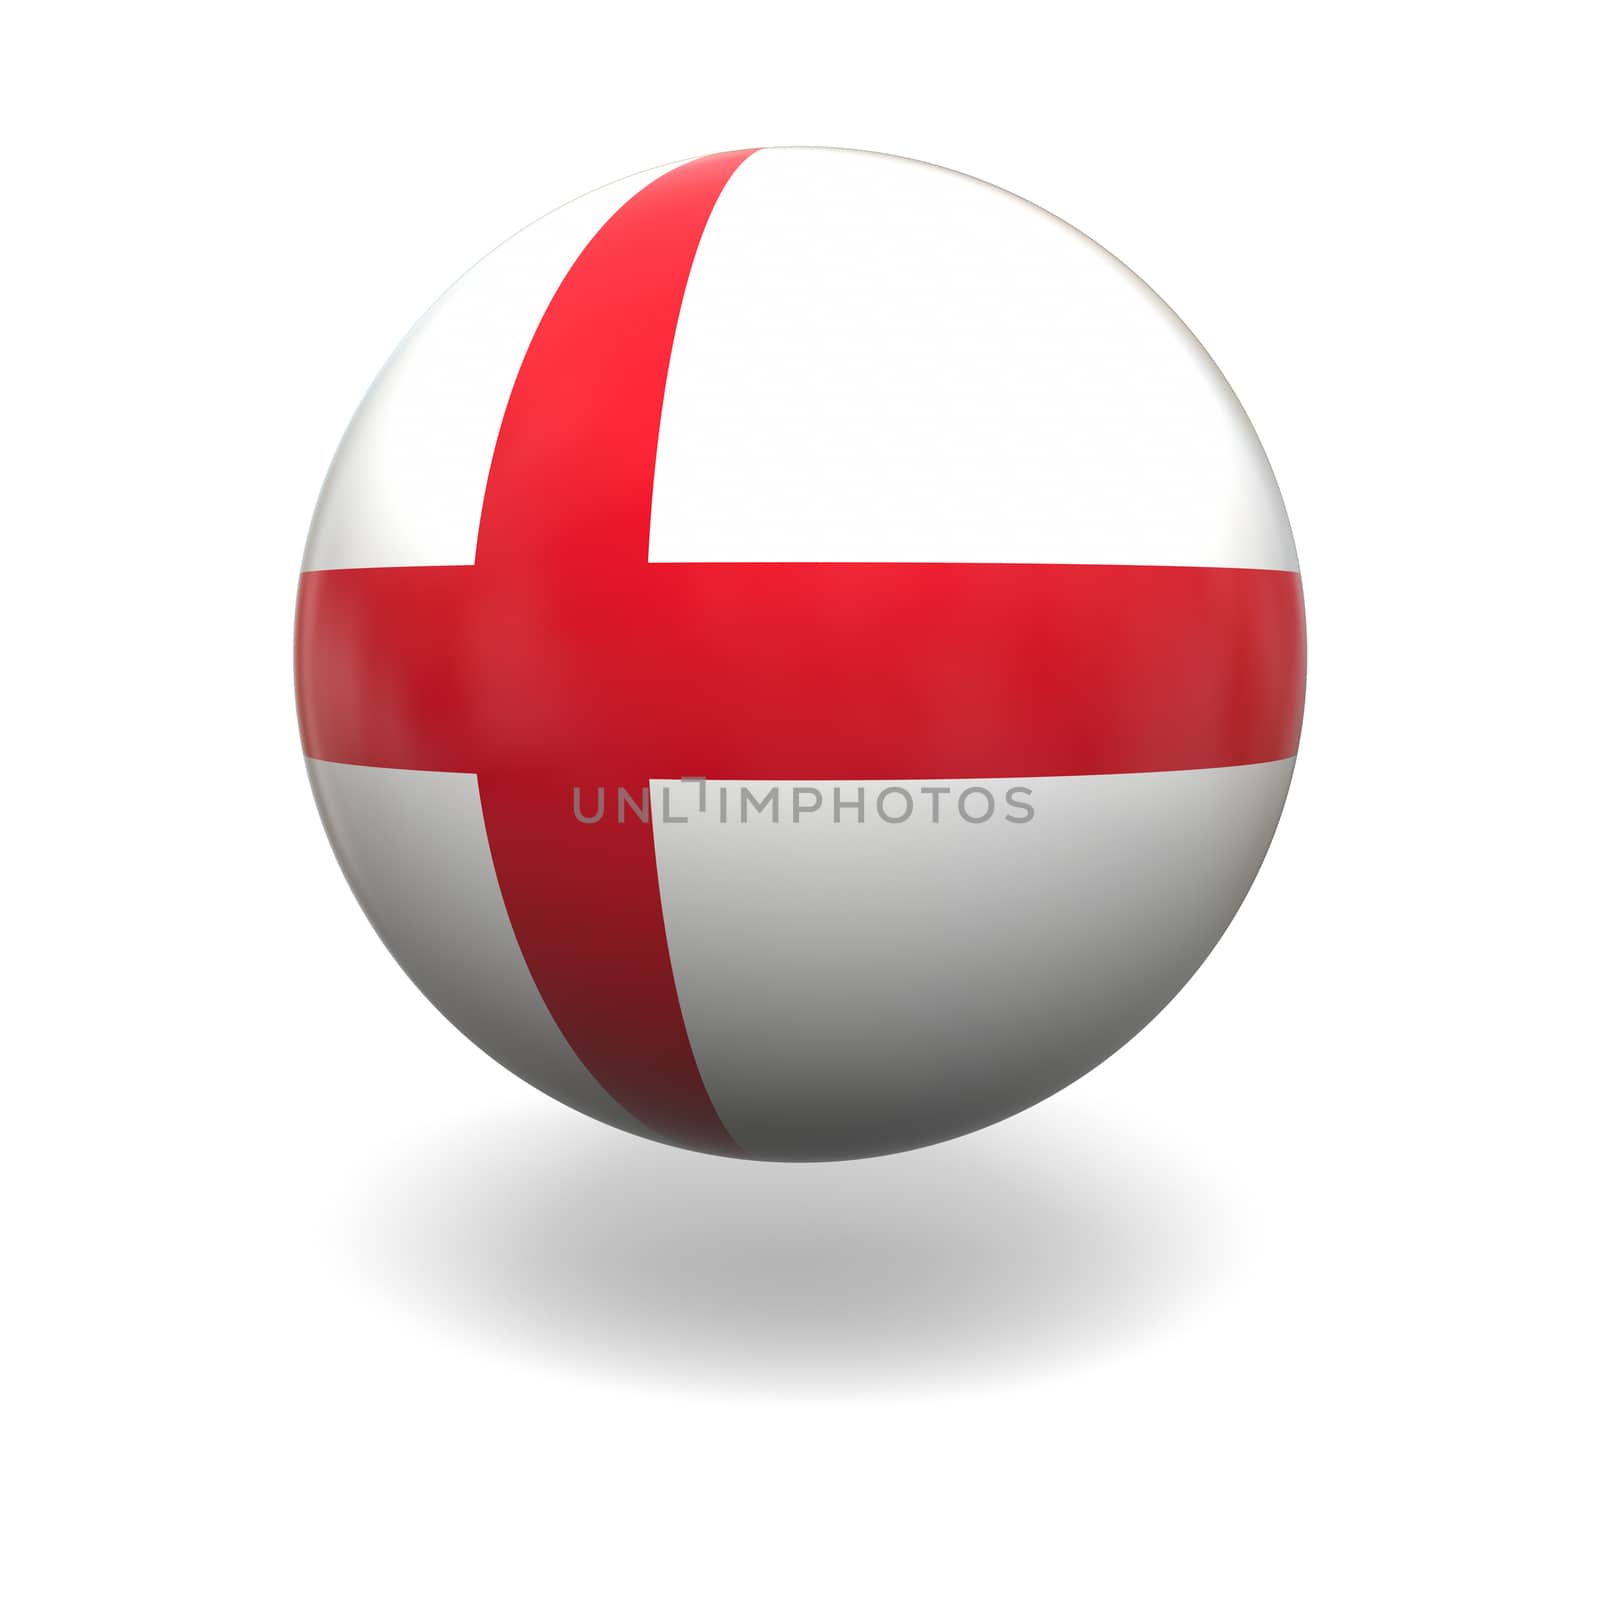 English flag by Harvepino